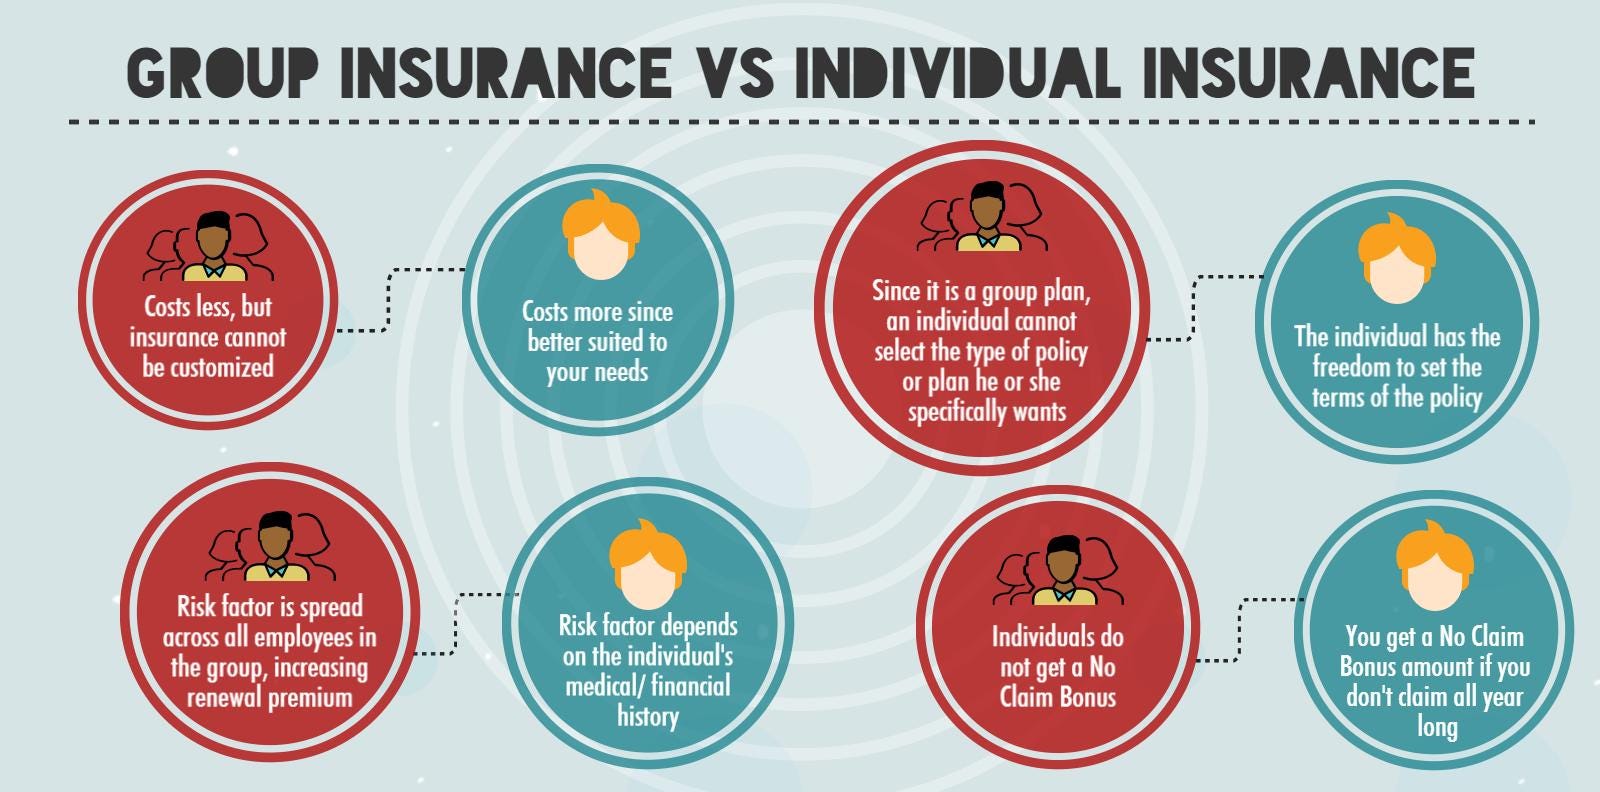 advantages of group medical insurance - cheney brennan - medium